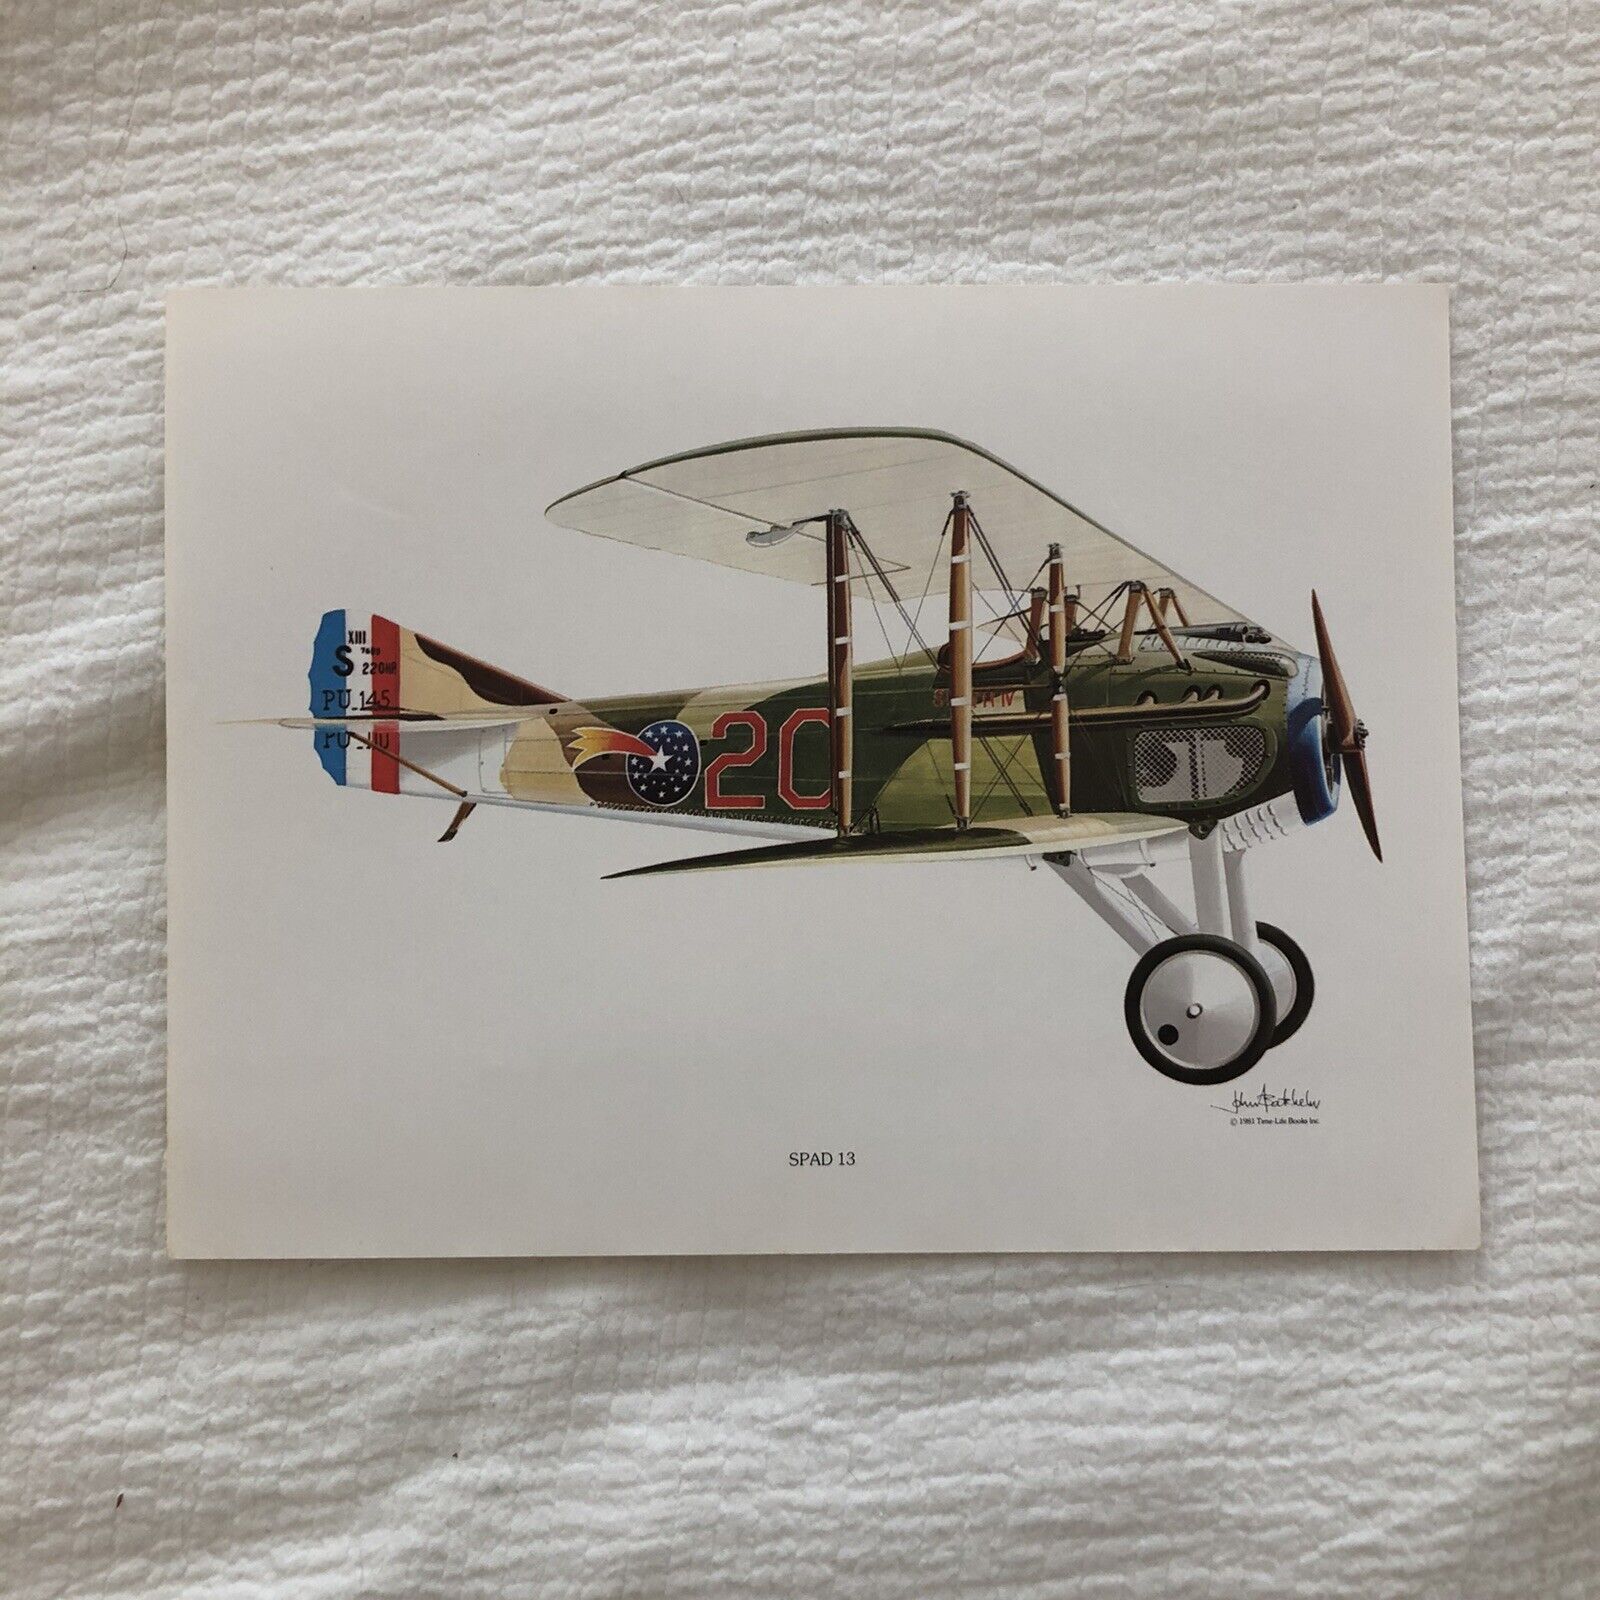 Spad 13 Air Plane Illustration Vintage Color Print 1981 (10.75x8in)